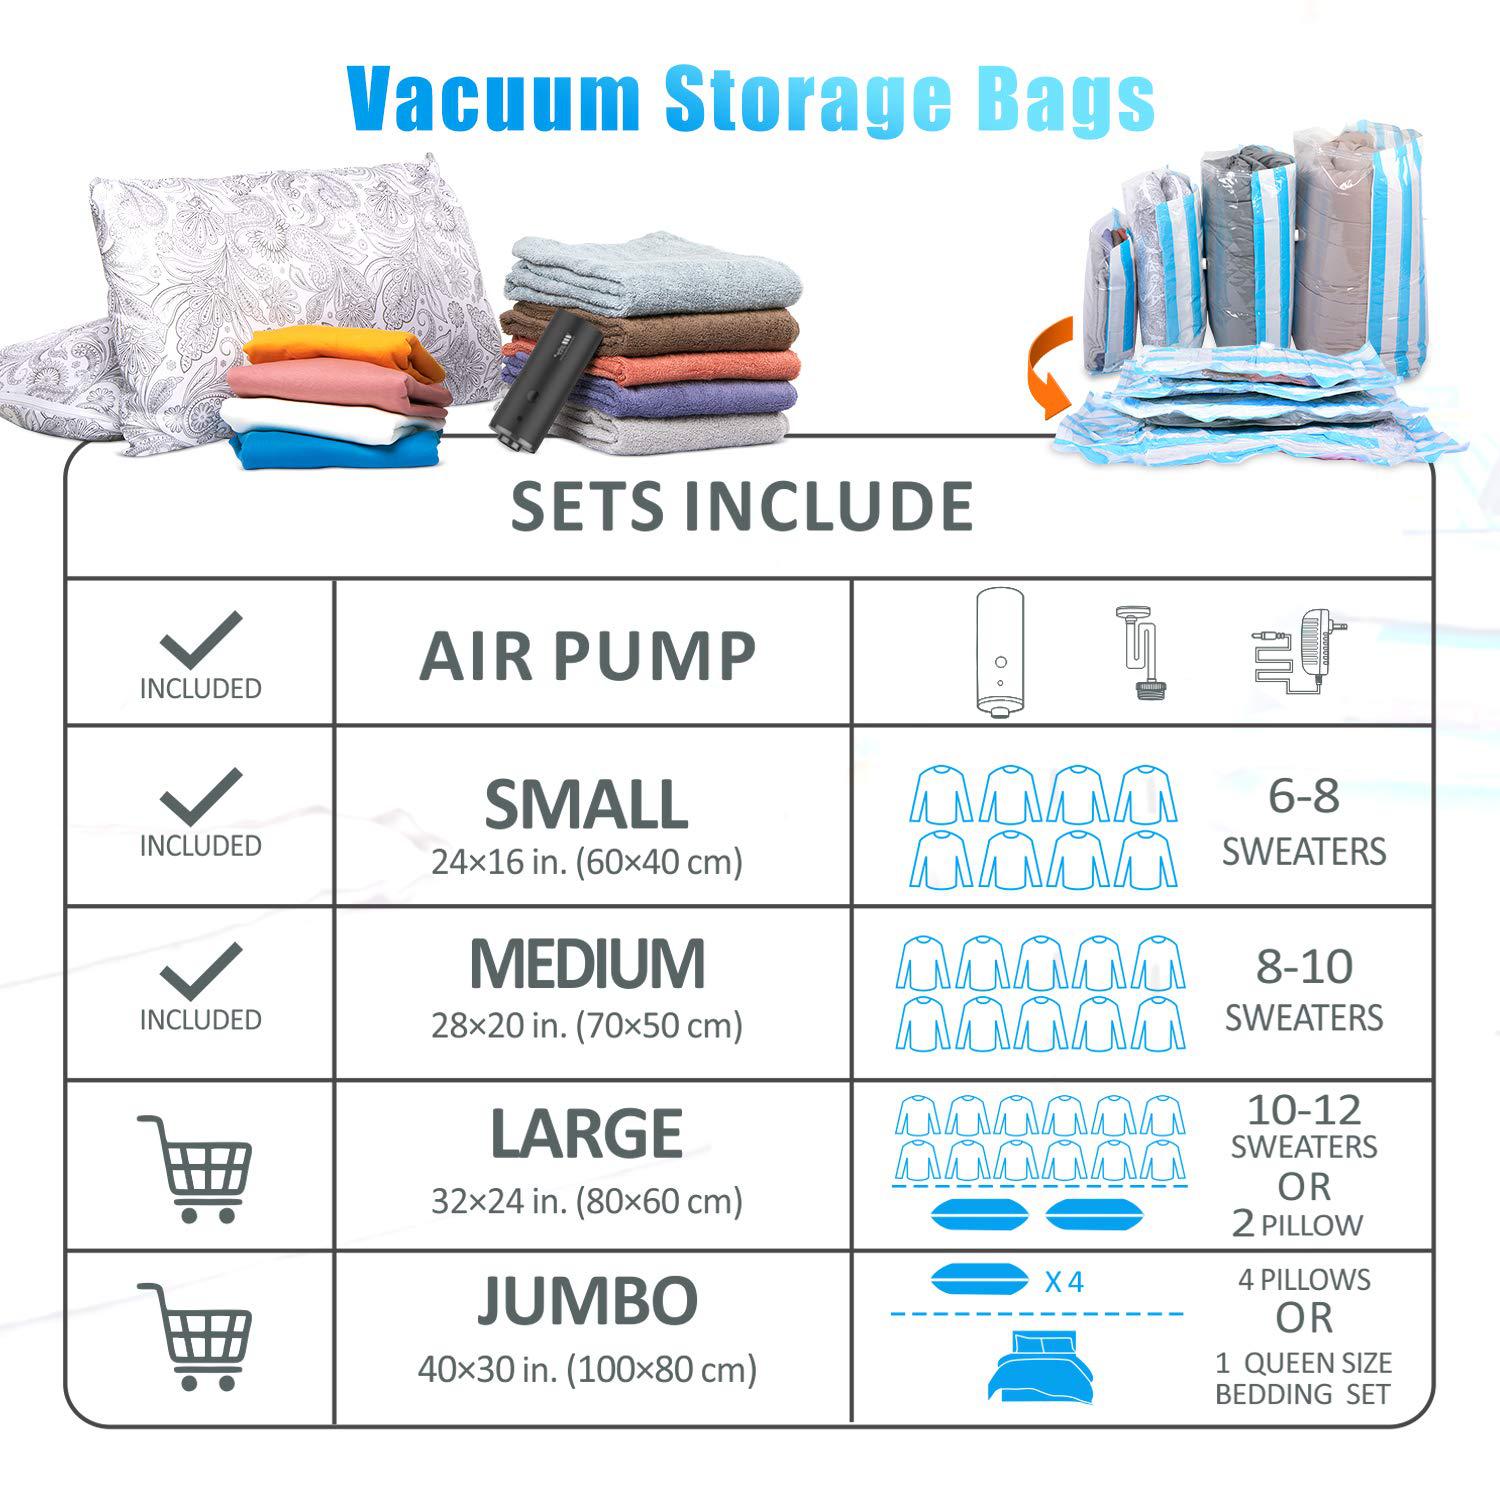 VMSTR vmstr travel vacuum storage bags with electric pump, medium